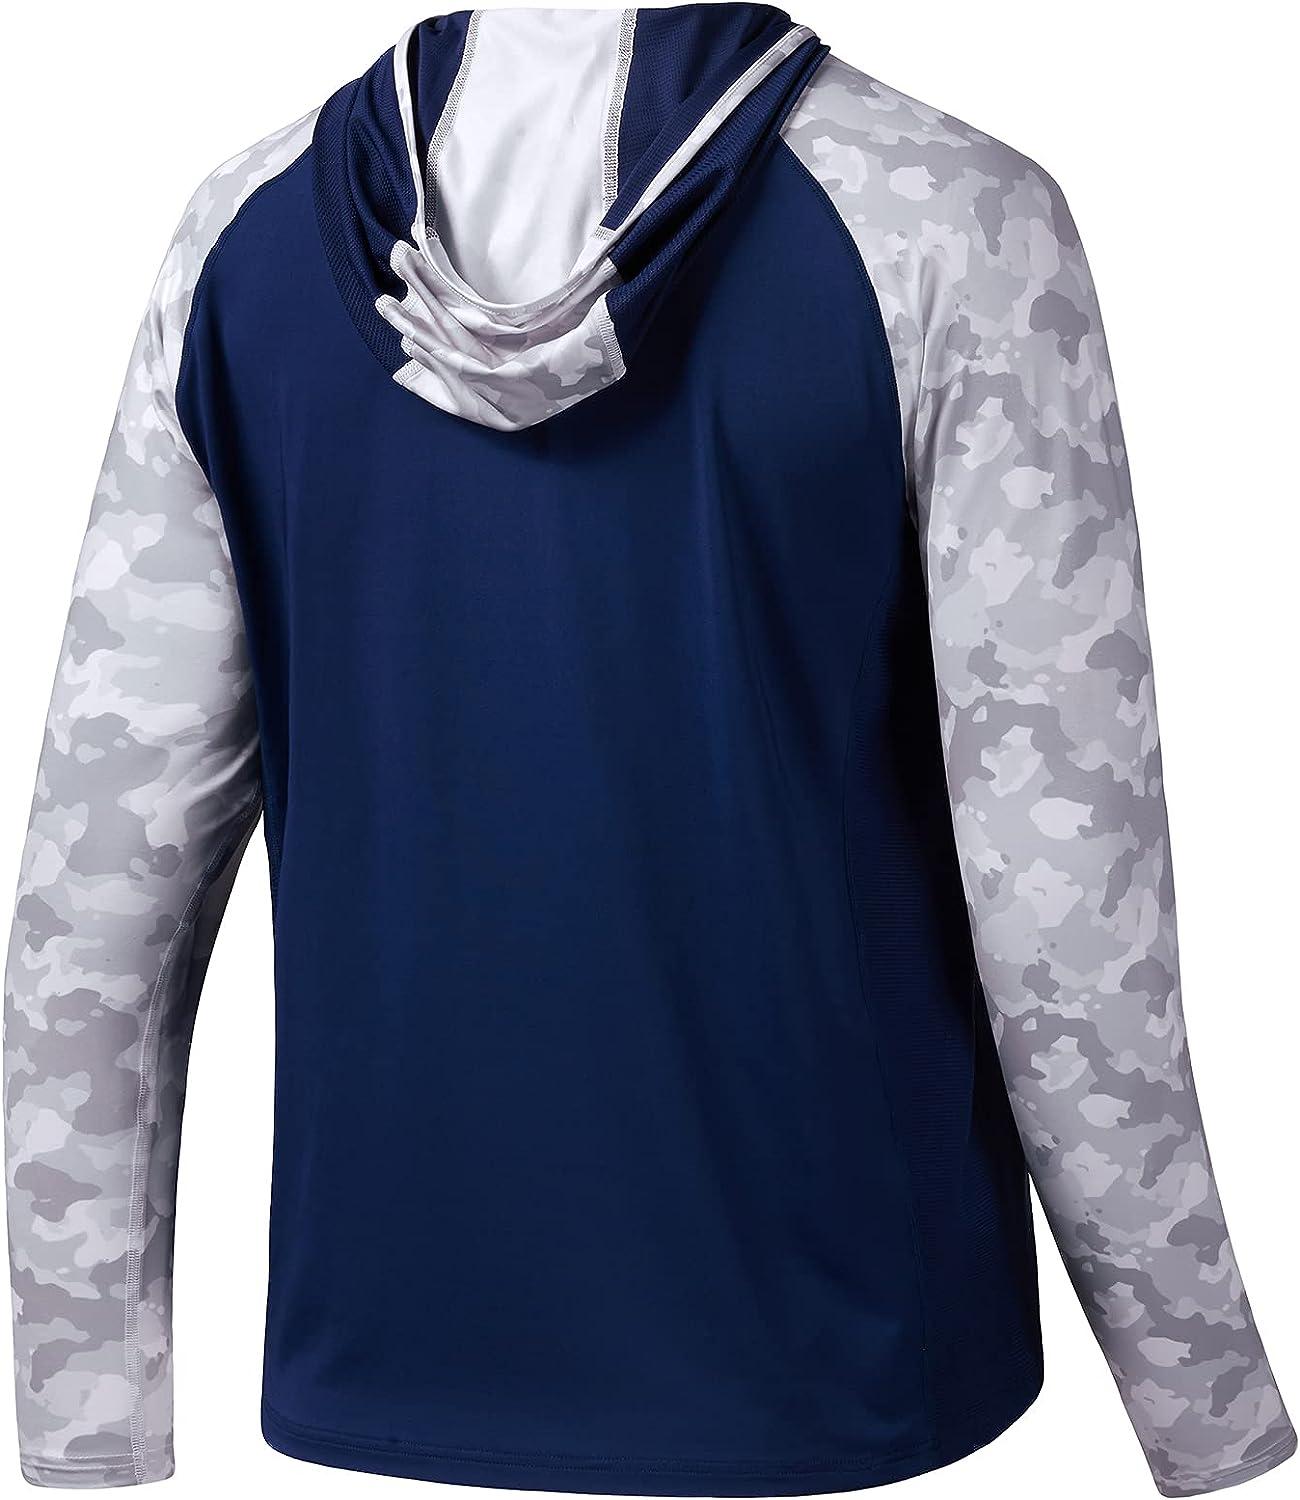 Bassdash UPF 50 Fishing Tee for Men Camo Long Sleeve Shirt Quick Dry Sweatshirts